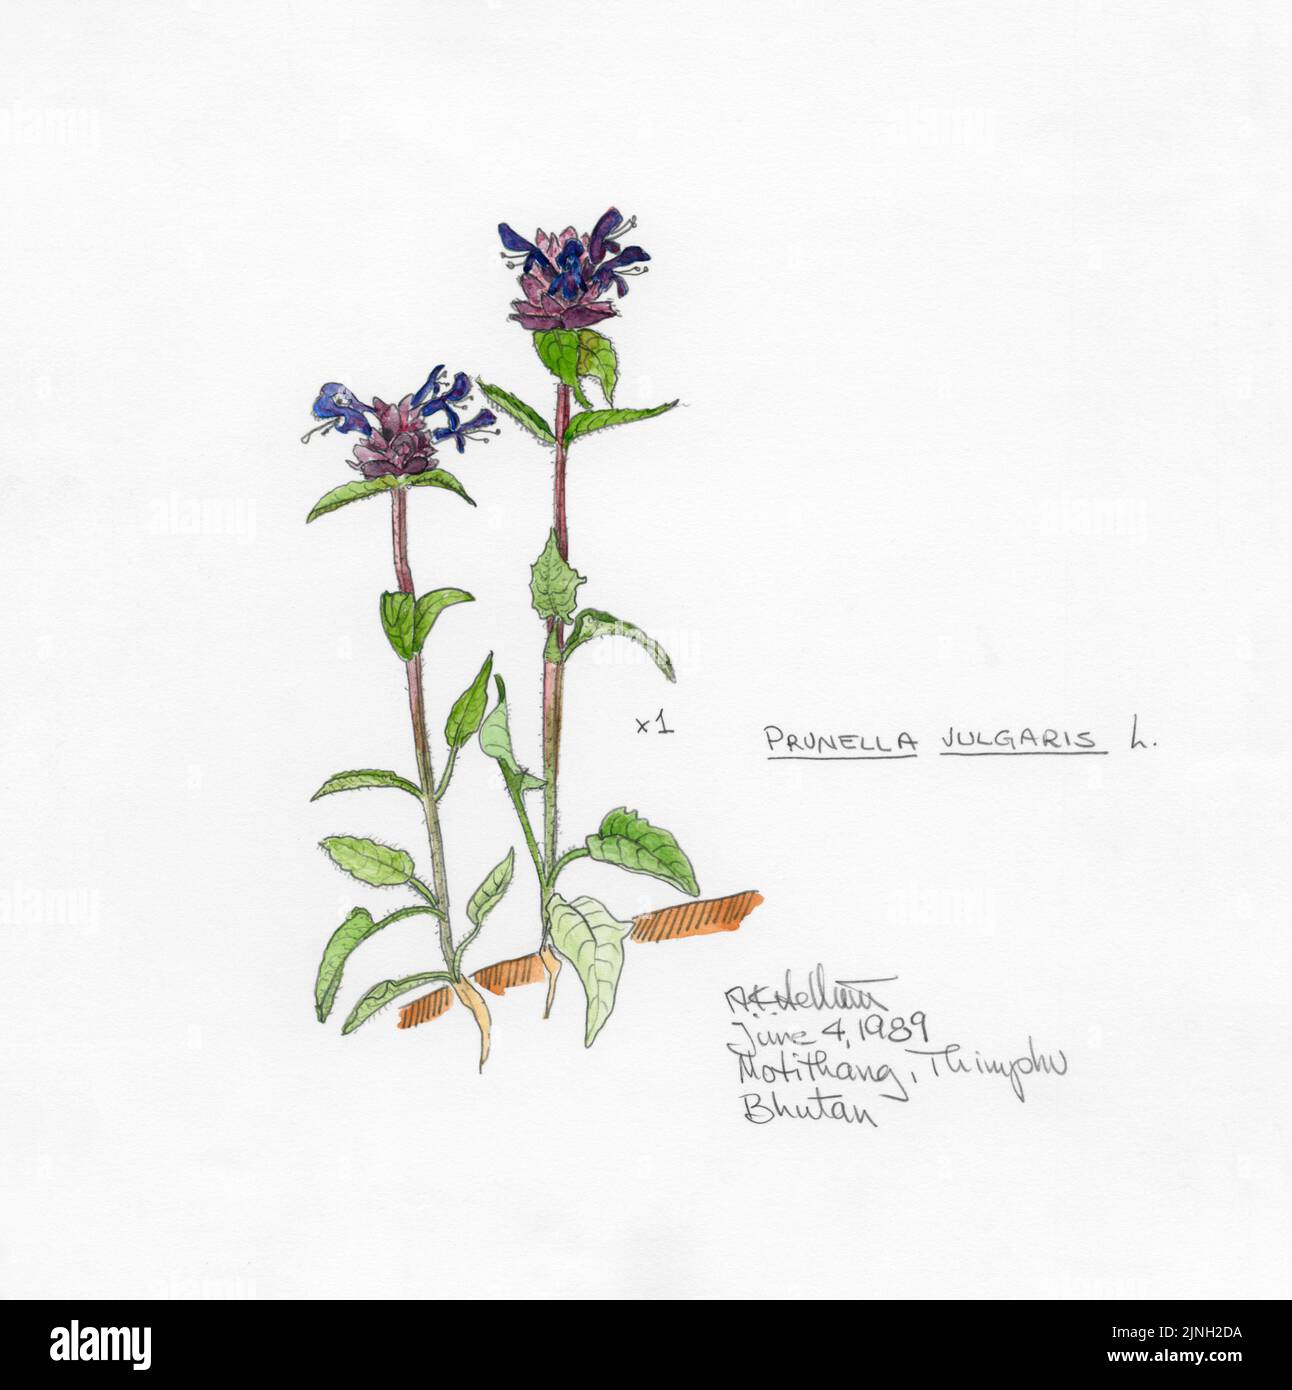 Prunella vulgaris (Labiteae) Mothitang, Bhutan June 04, 1989 Stock Photo